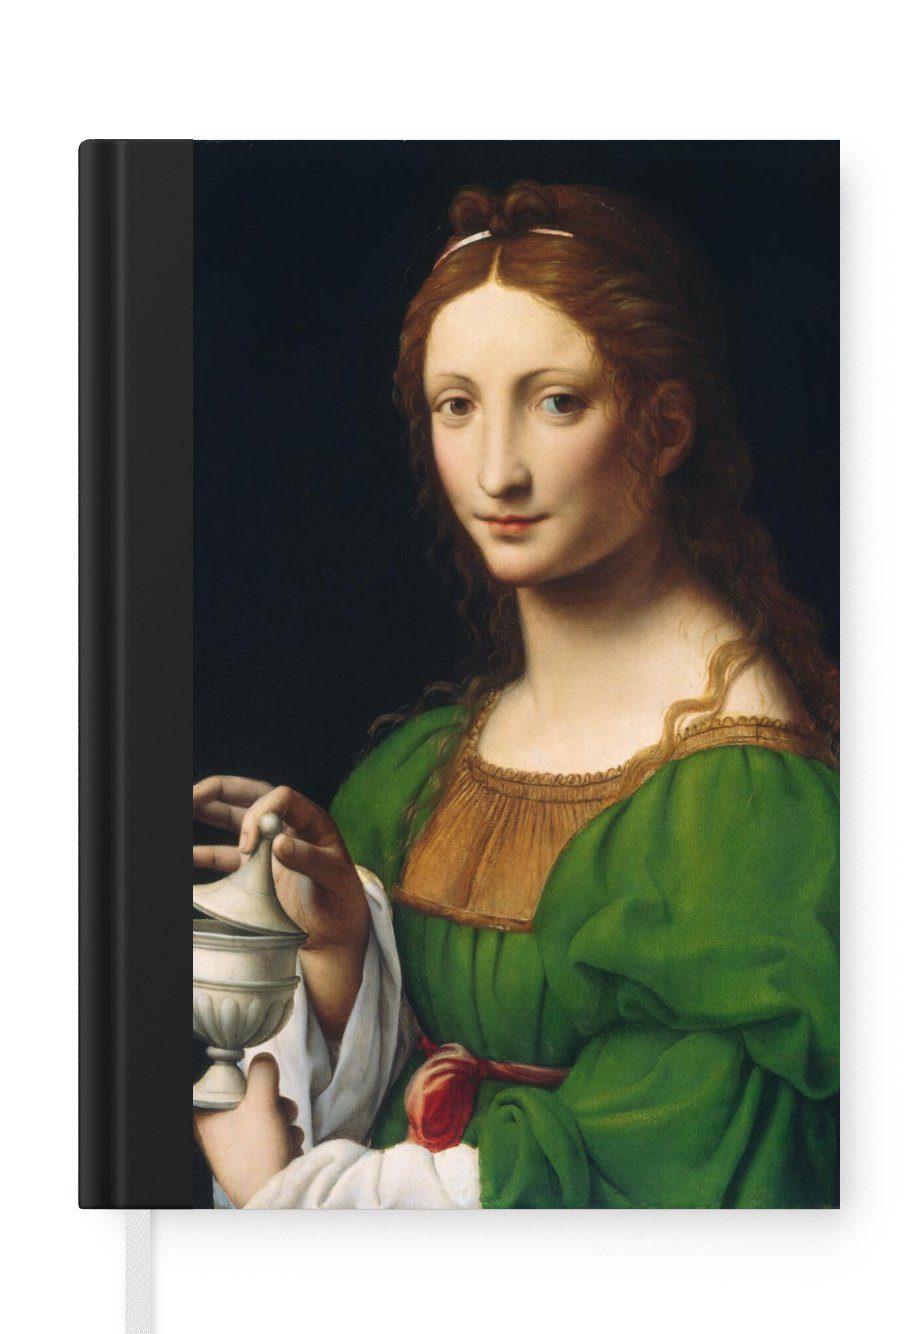 MuchoWow Notizbuch Maria Magdalena - Leonardo da Vinci, Journal, Merkzettel, Tagebuch, Notizheft, A5, 98 Seiten, Haushaltsbuch